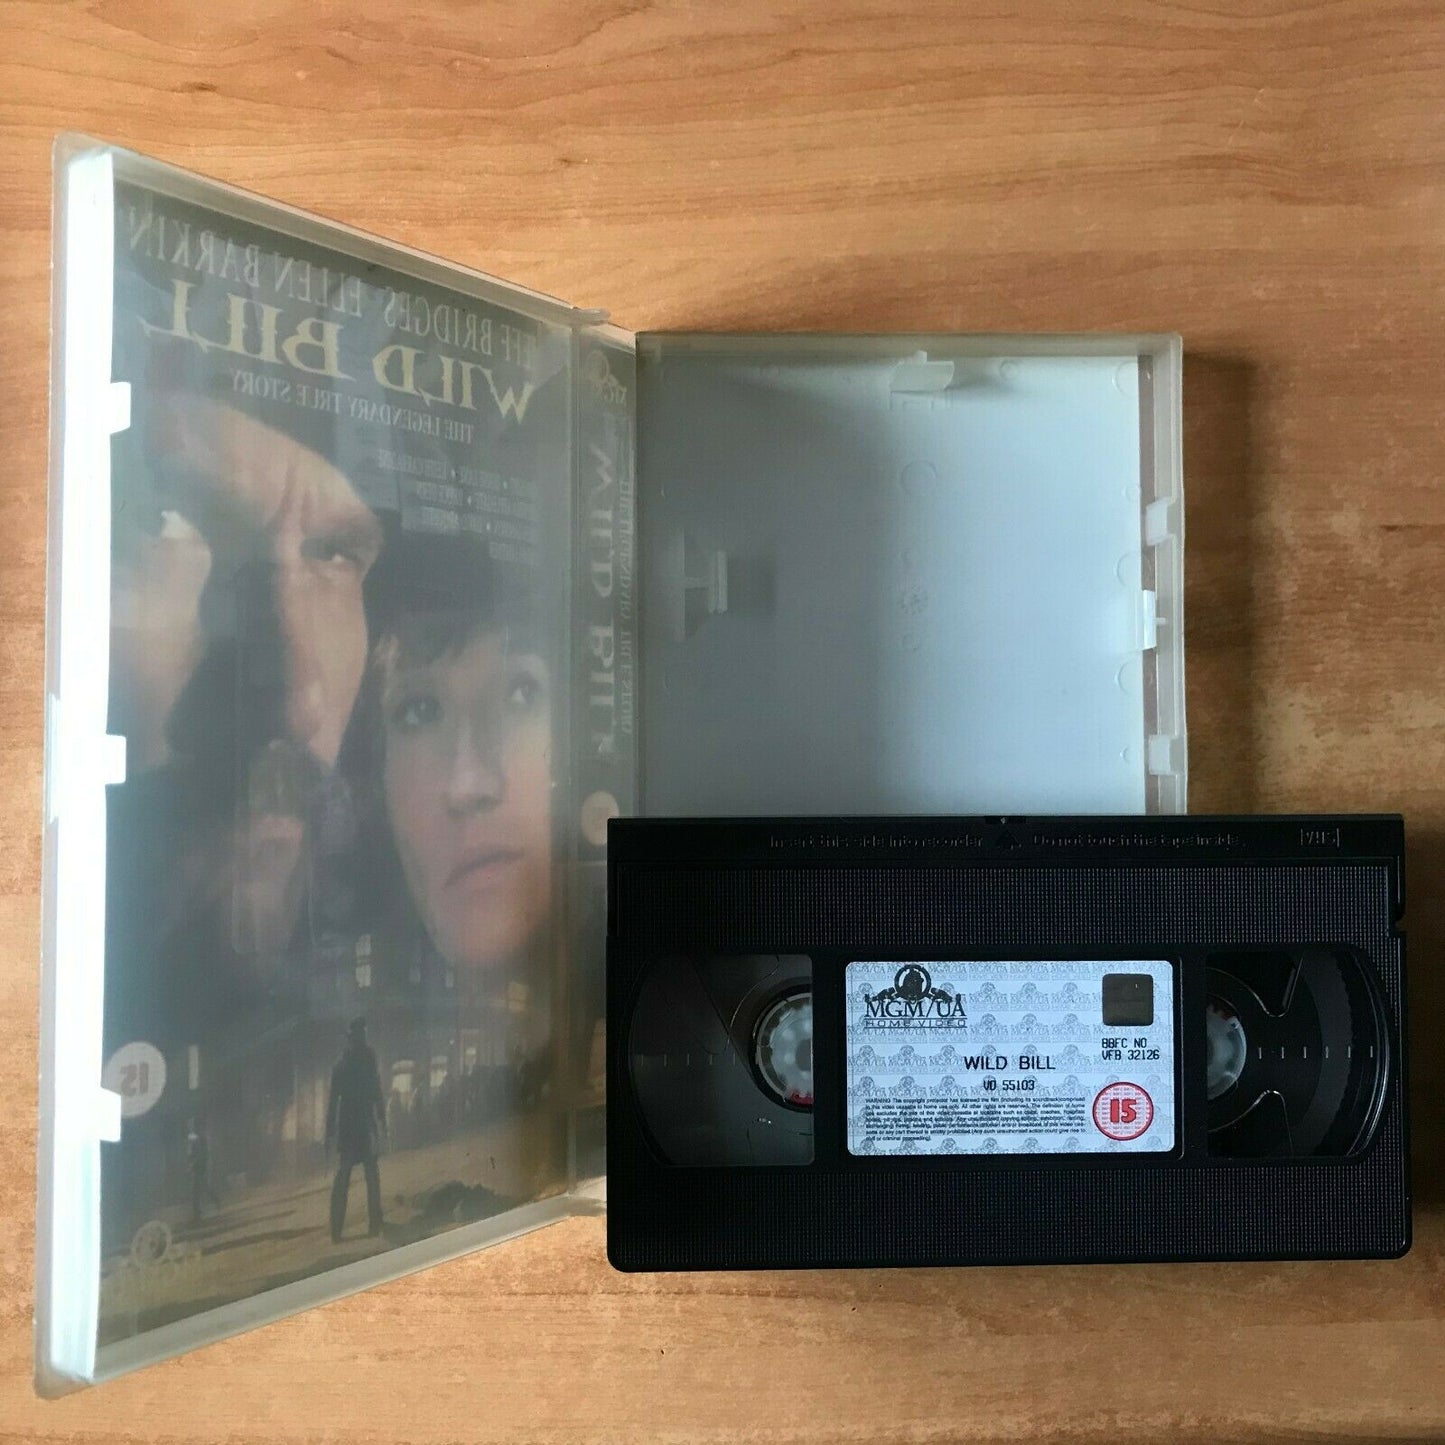 Wild Bill: Biographical Western [Large Box] Jeff Bridges / Ellen Barkin - VHS-